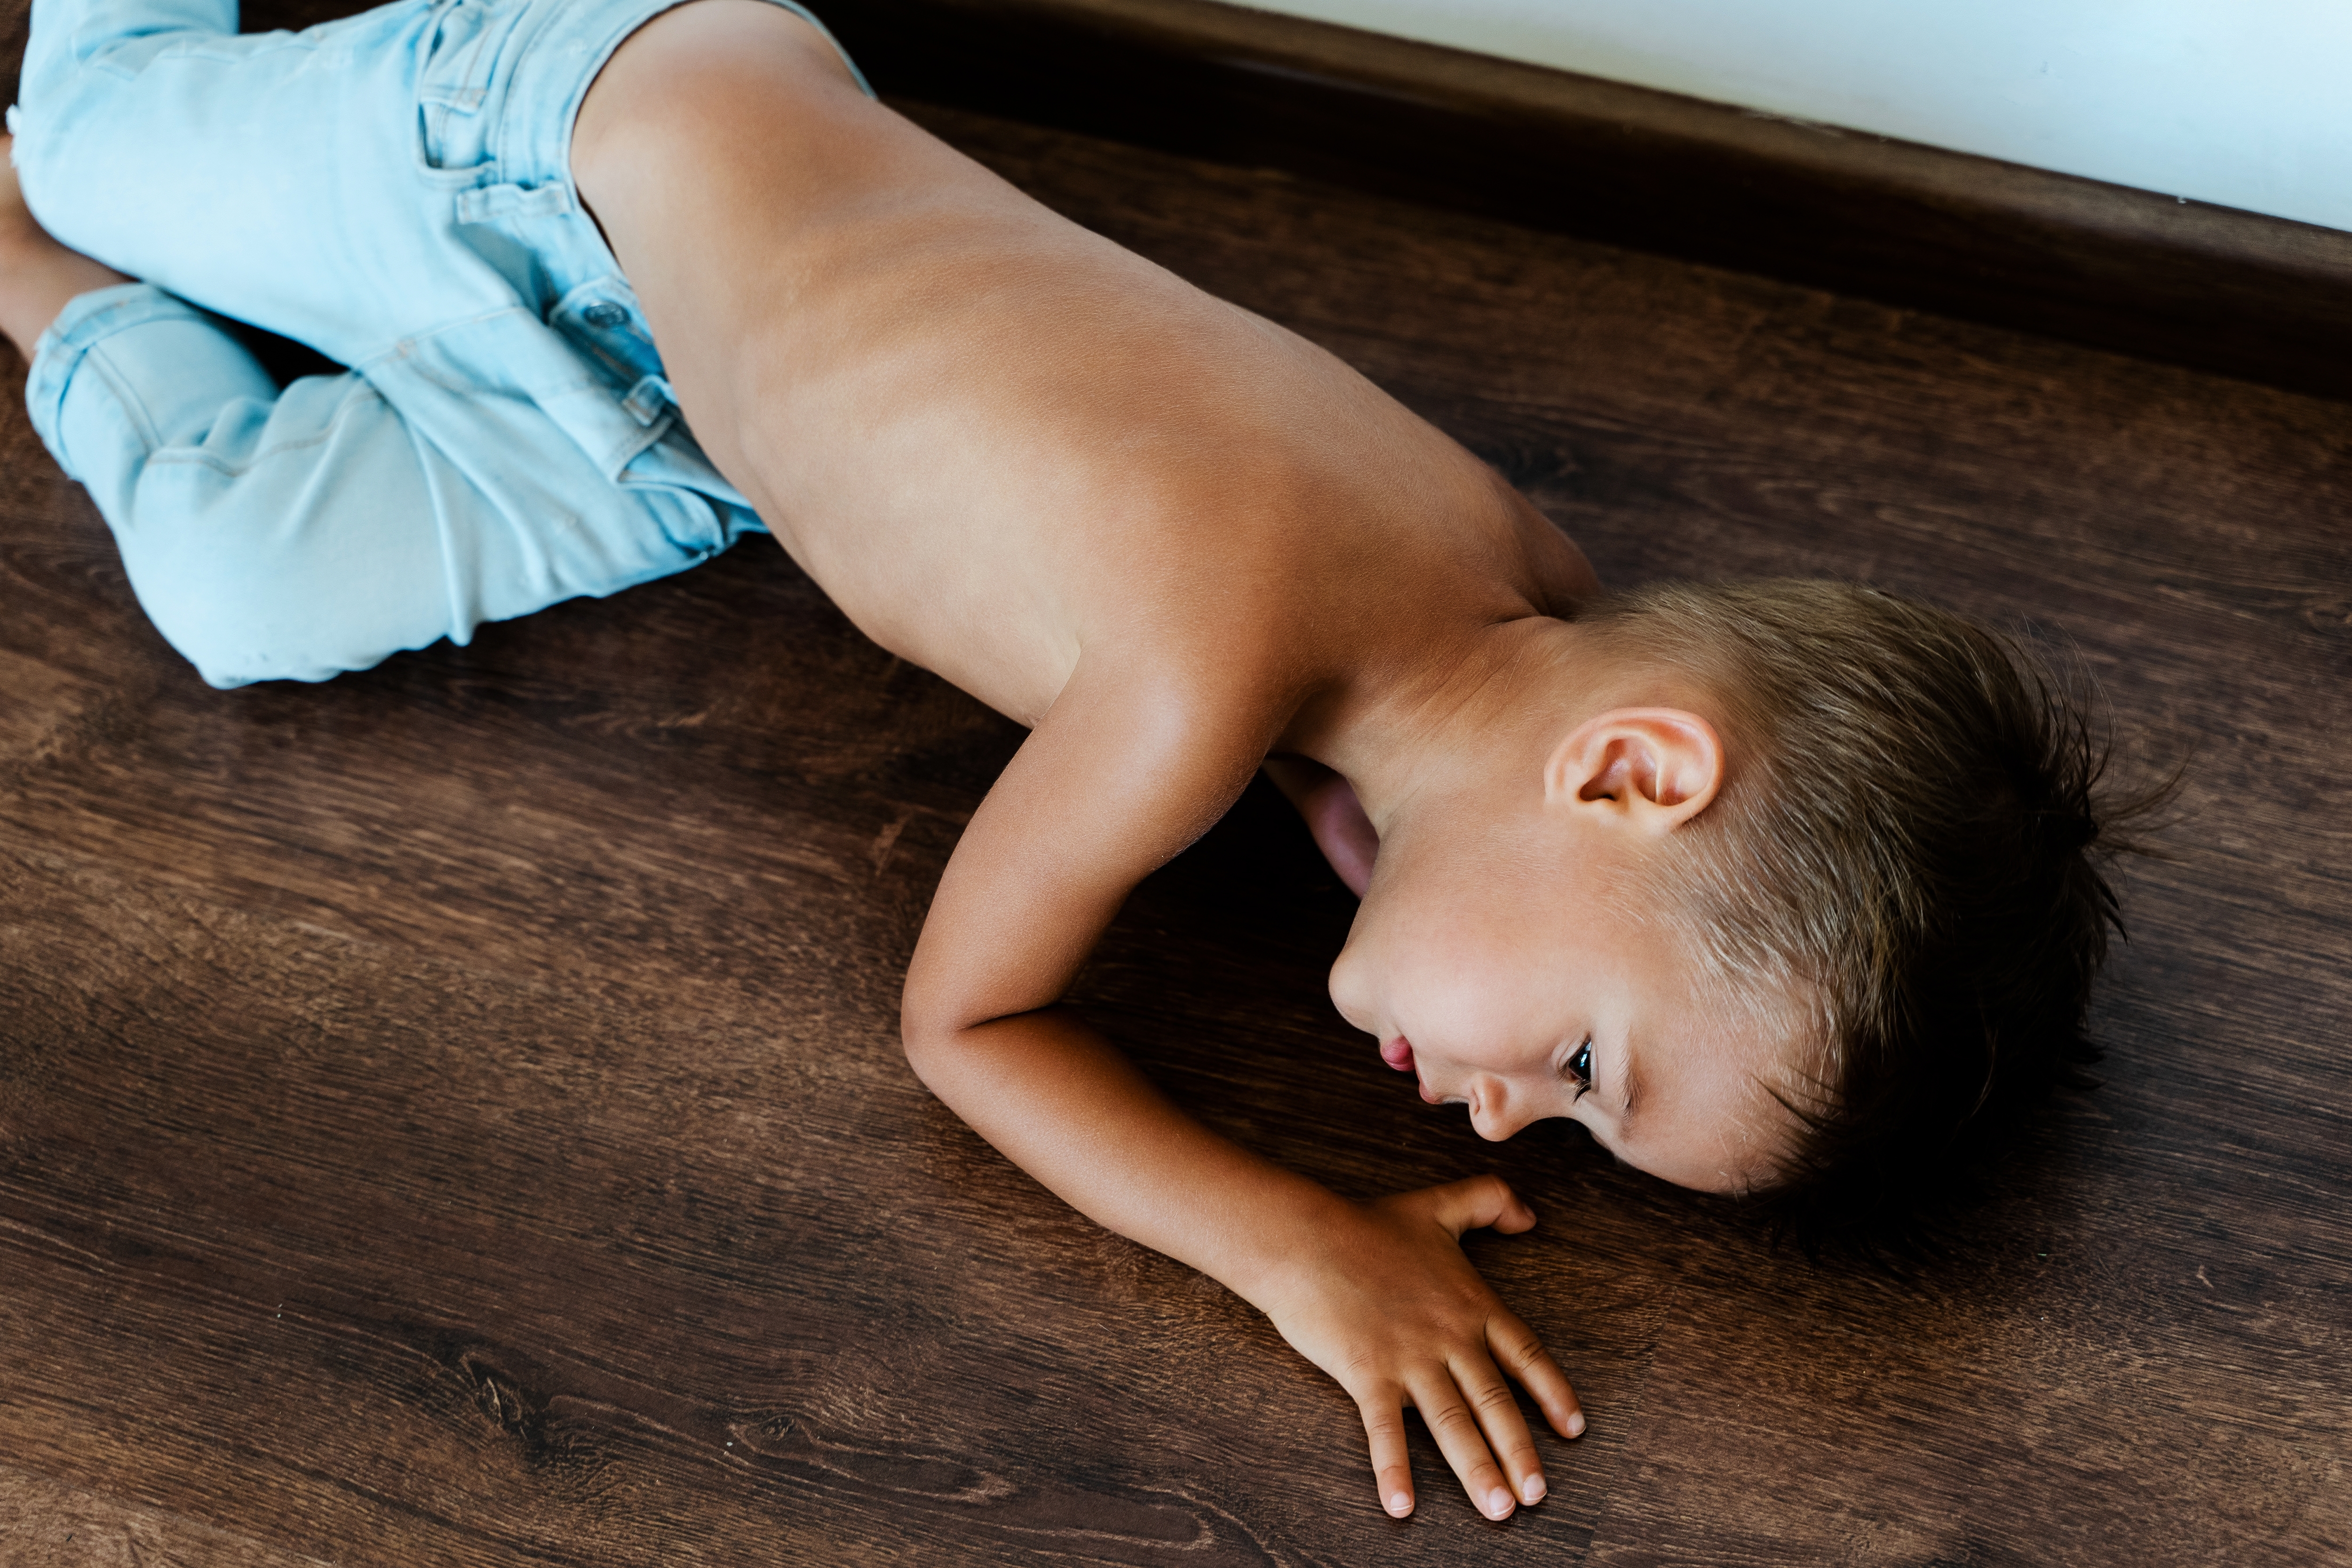 Niño triste tirado en el suelo. | Foto: Shutterstock